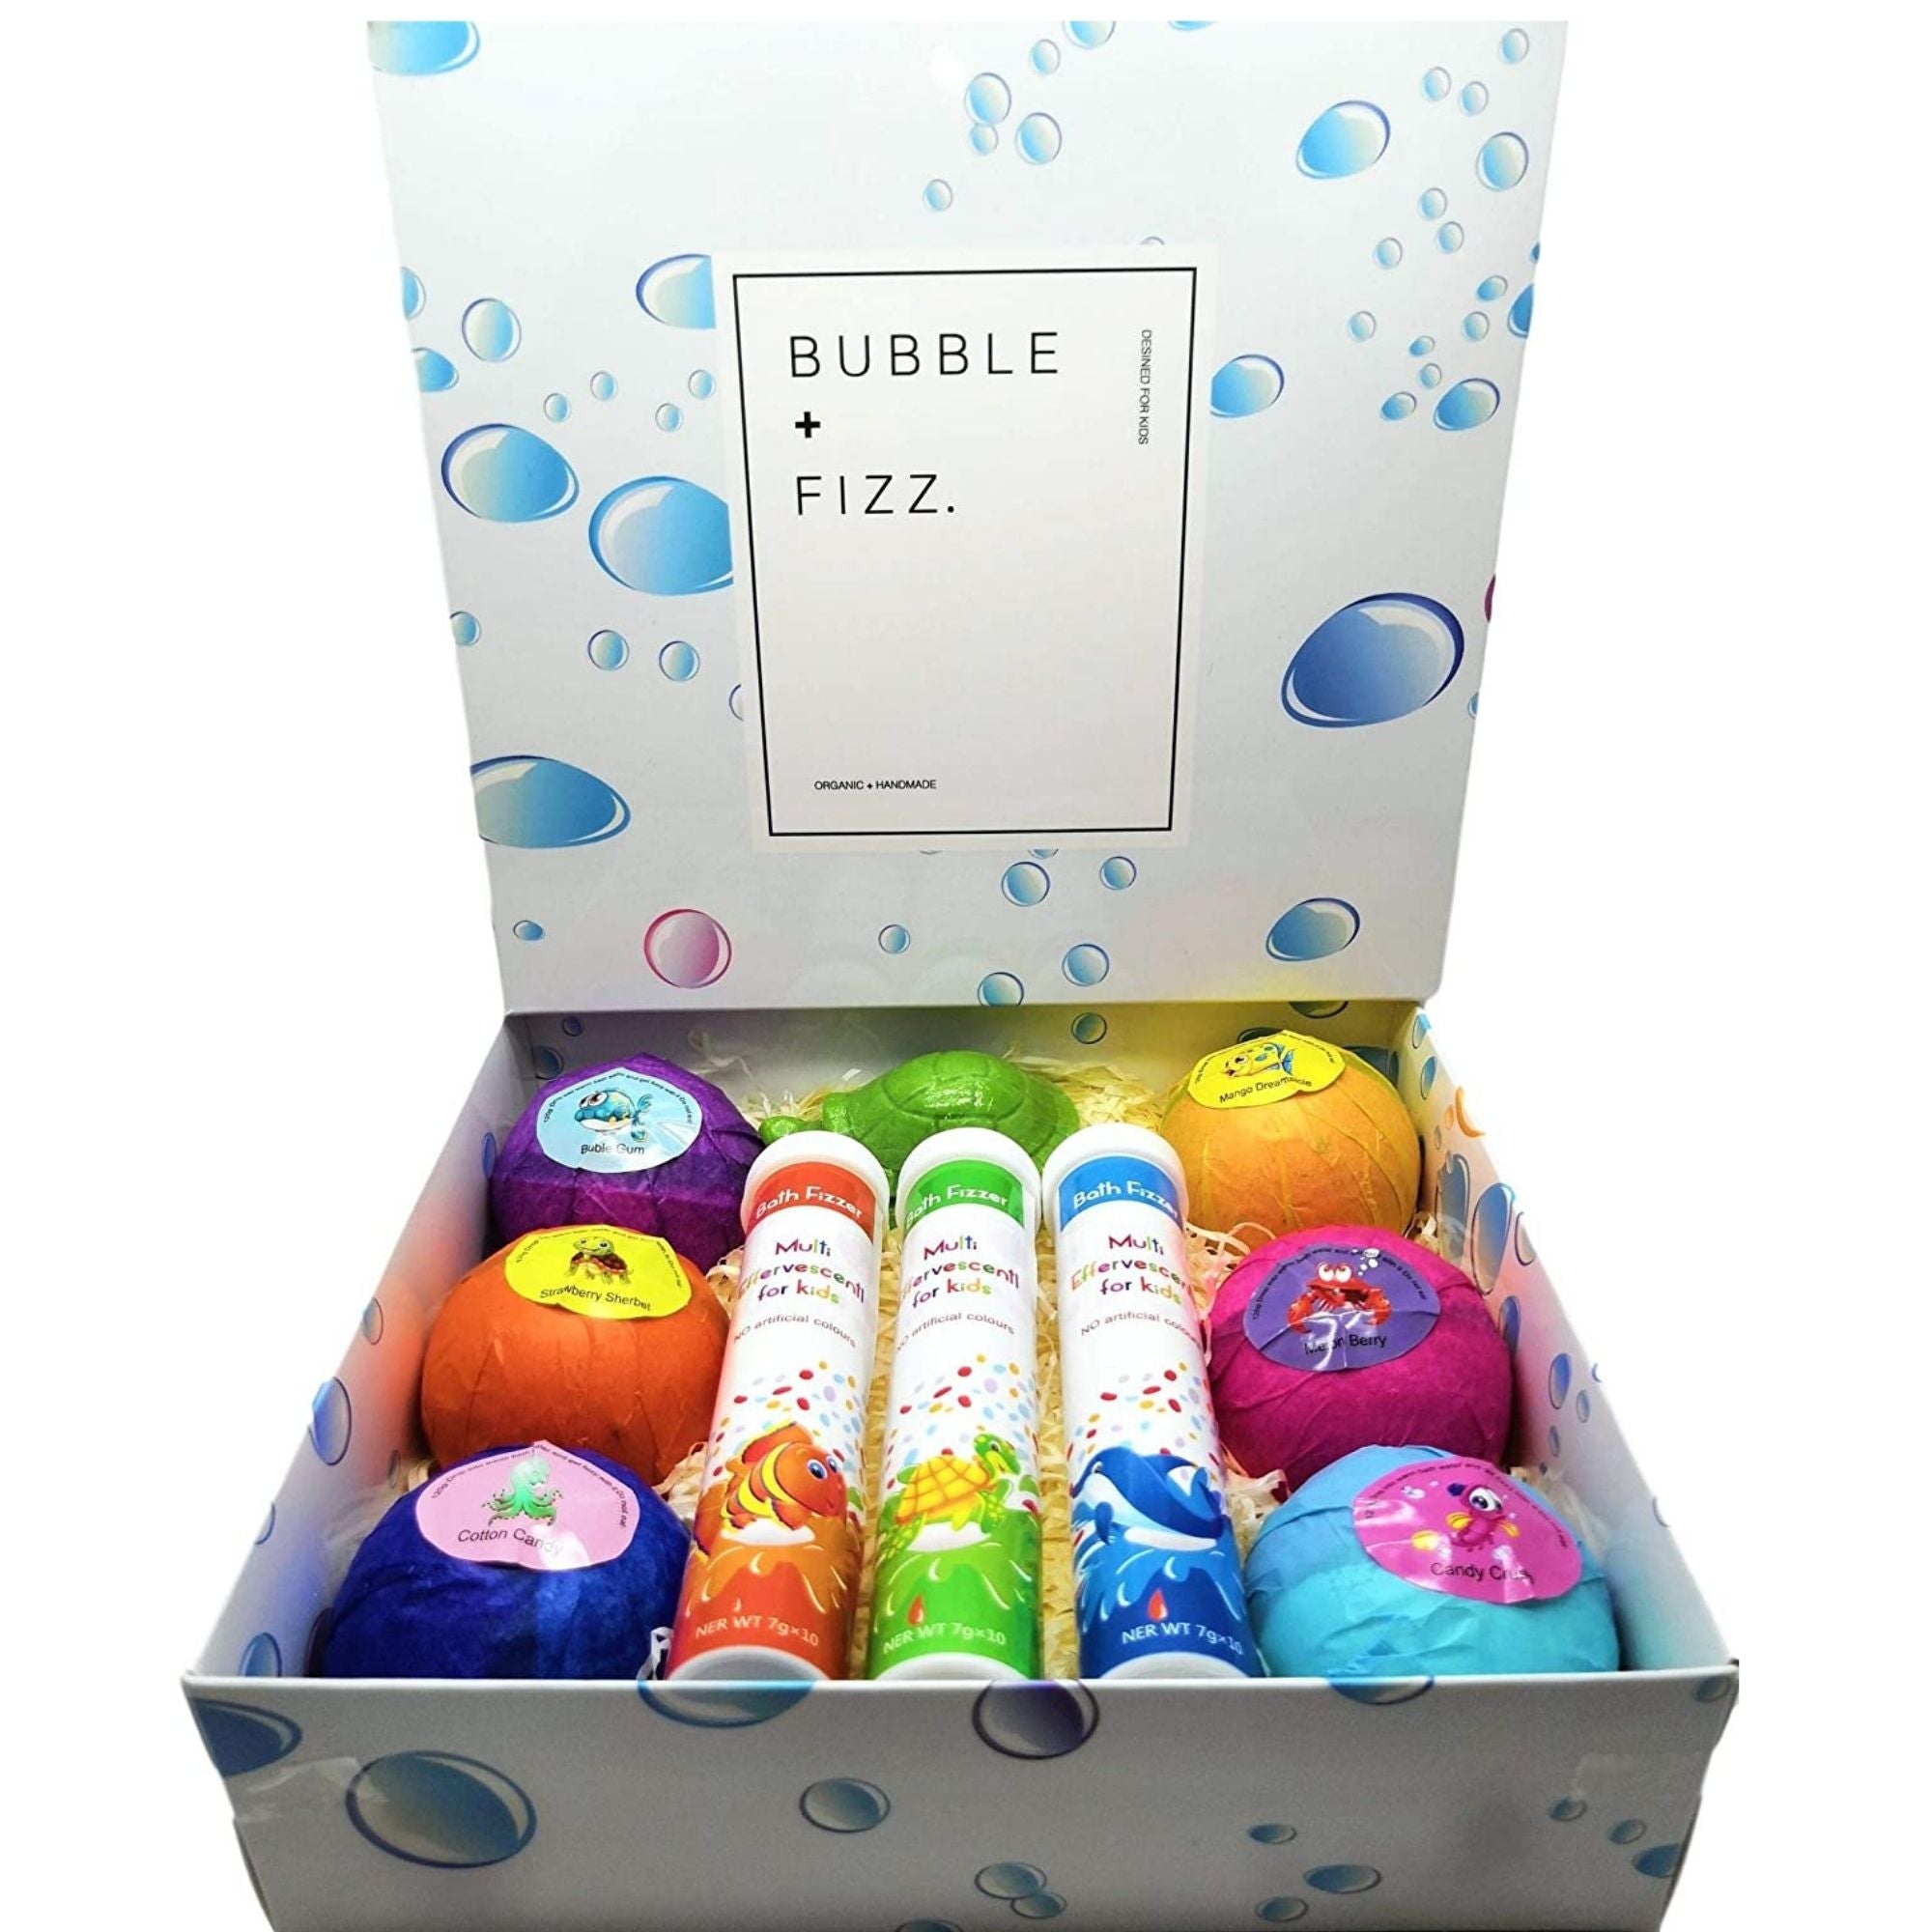 POKEMON Bath Bombs For Kids With Surprise Toys Inside (Pokemon) USA made,  Natural, Organic XL 5 oz Gift Set For Girls/Boy